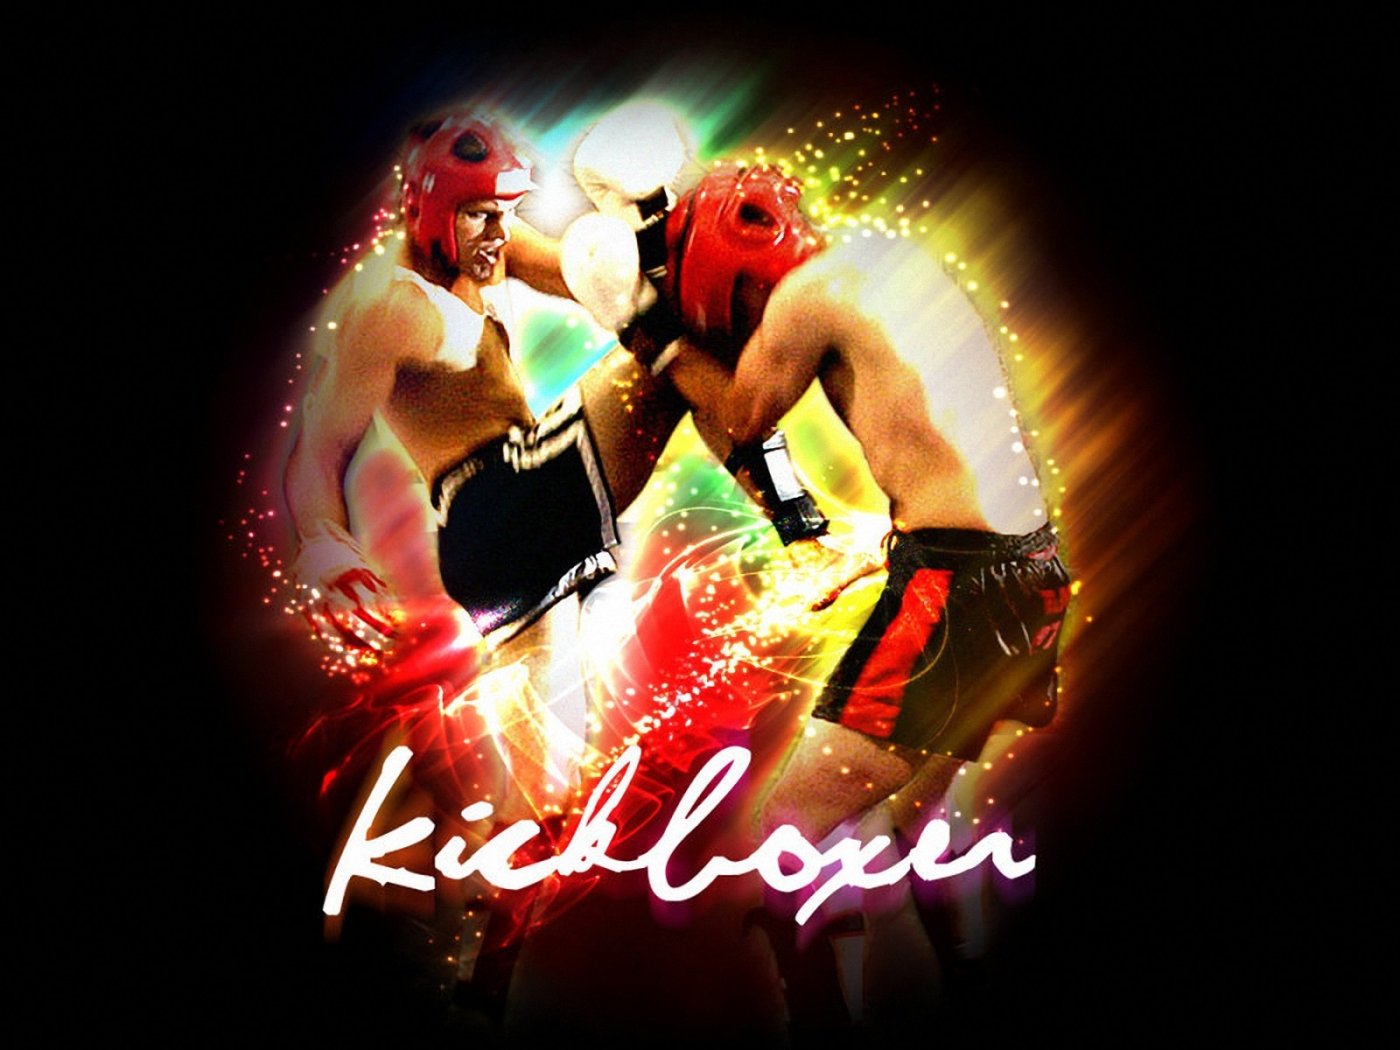 Kickboxer Wallpaper